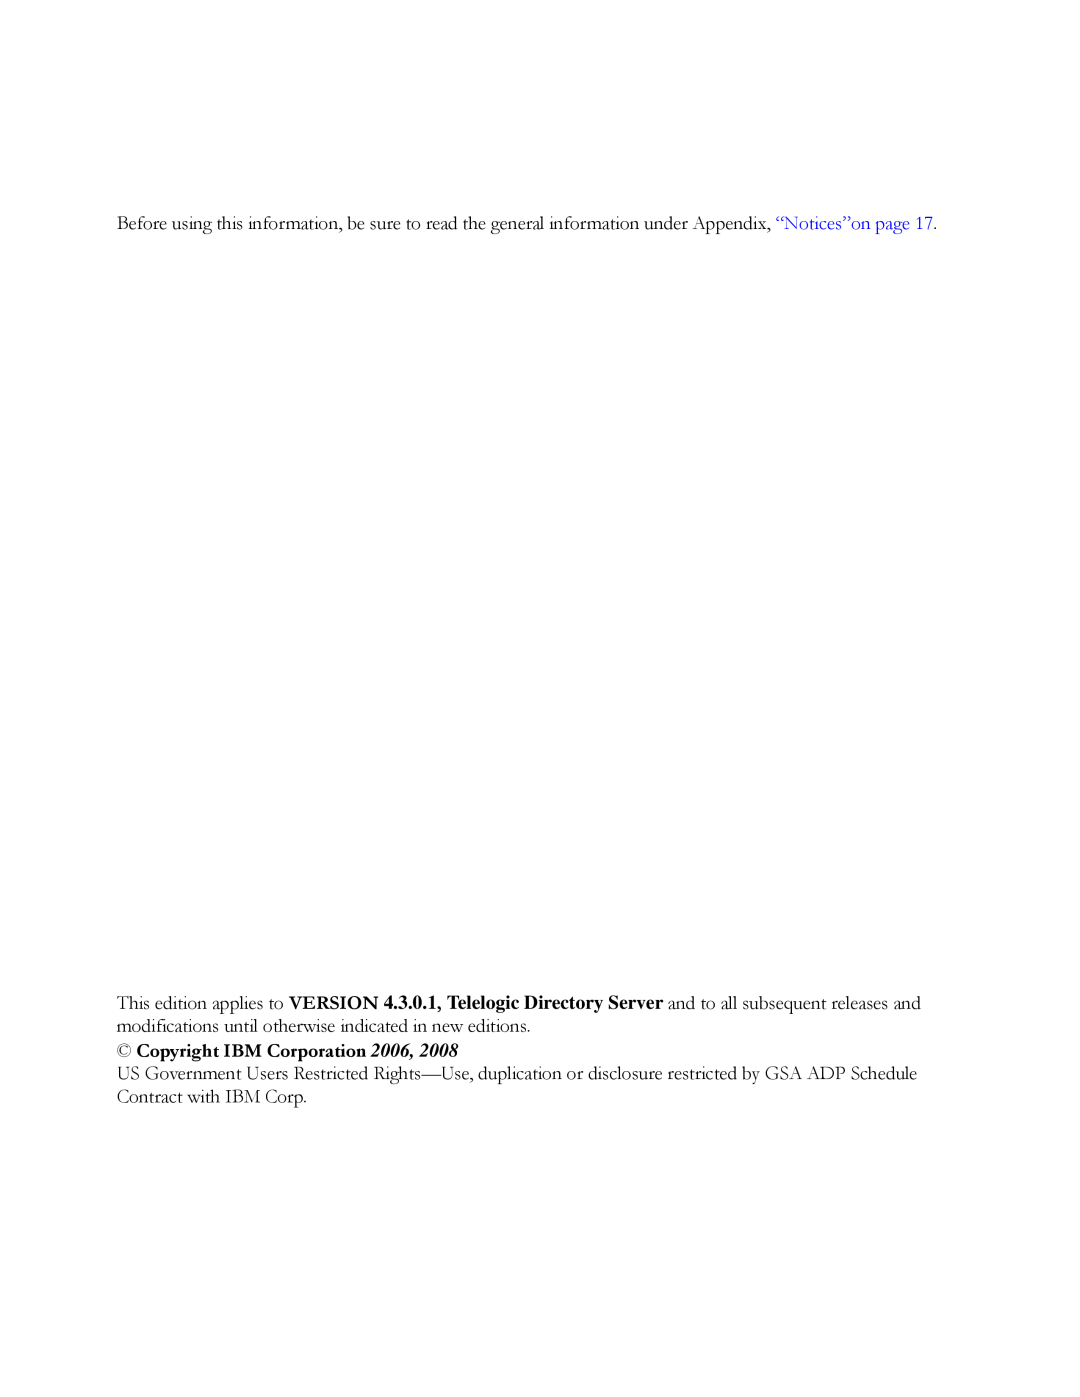 IBM Telelogic Directory Server manual Copyright IBM Corporation 2006 